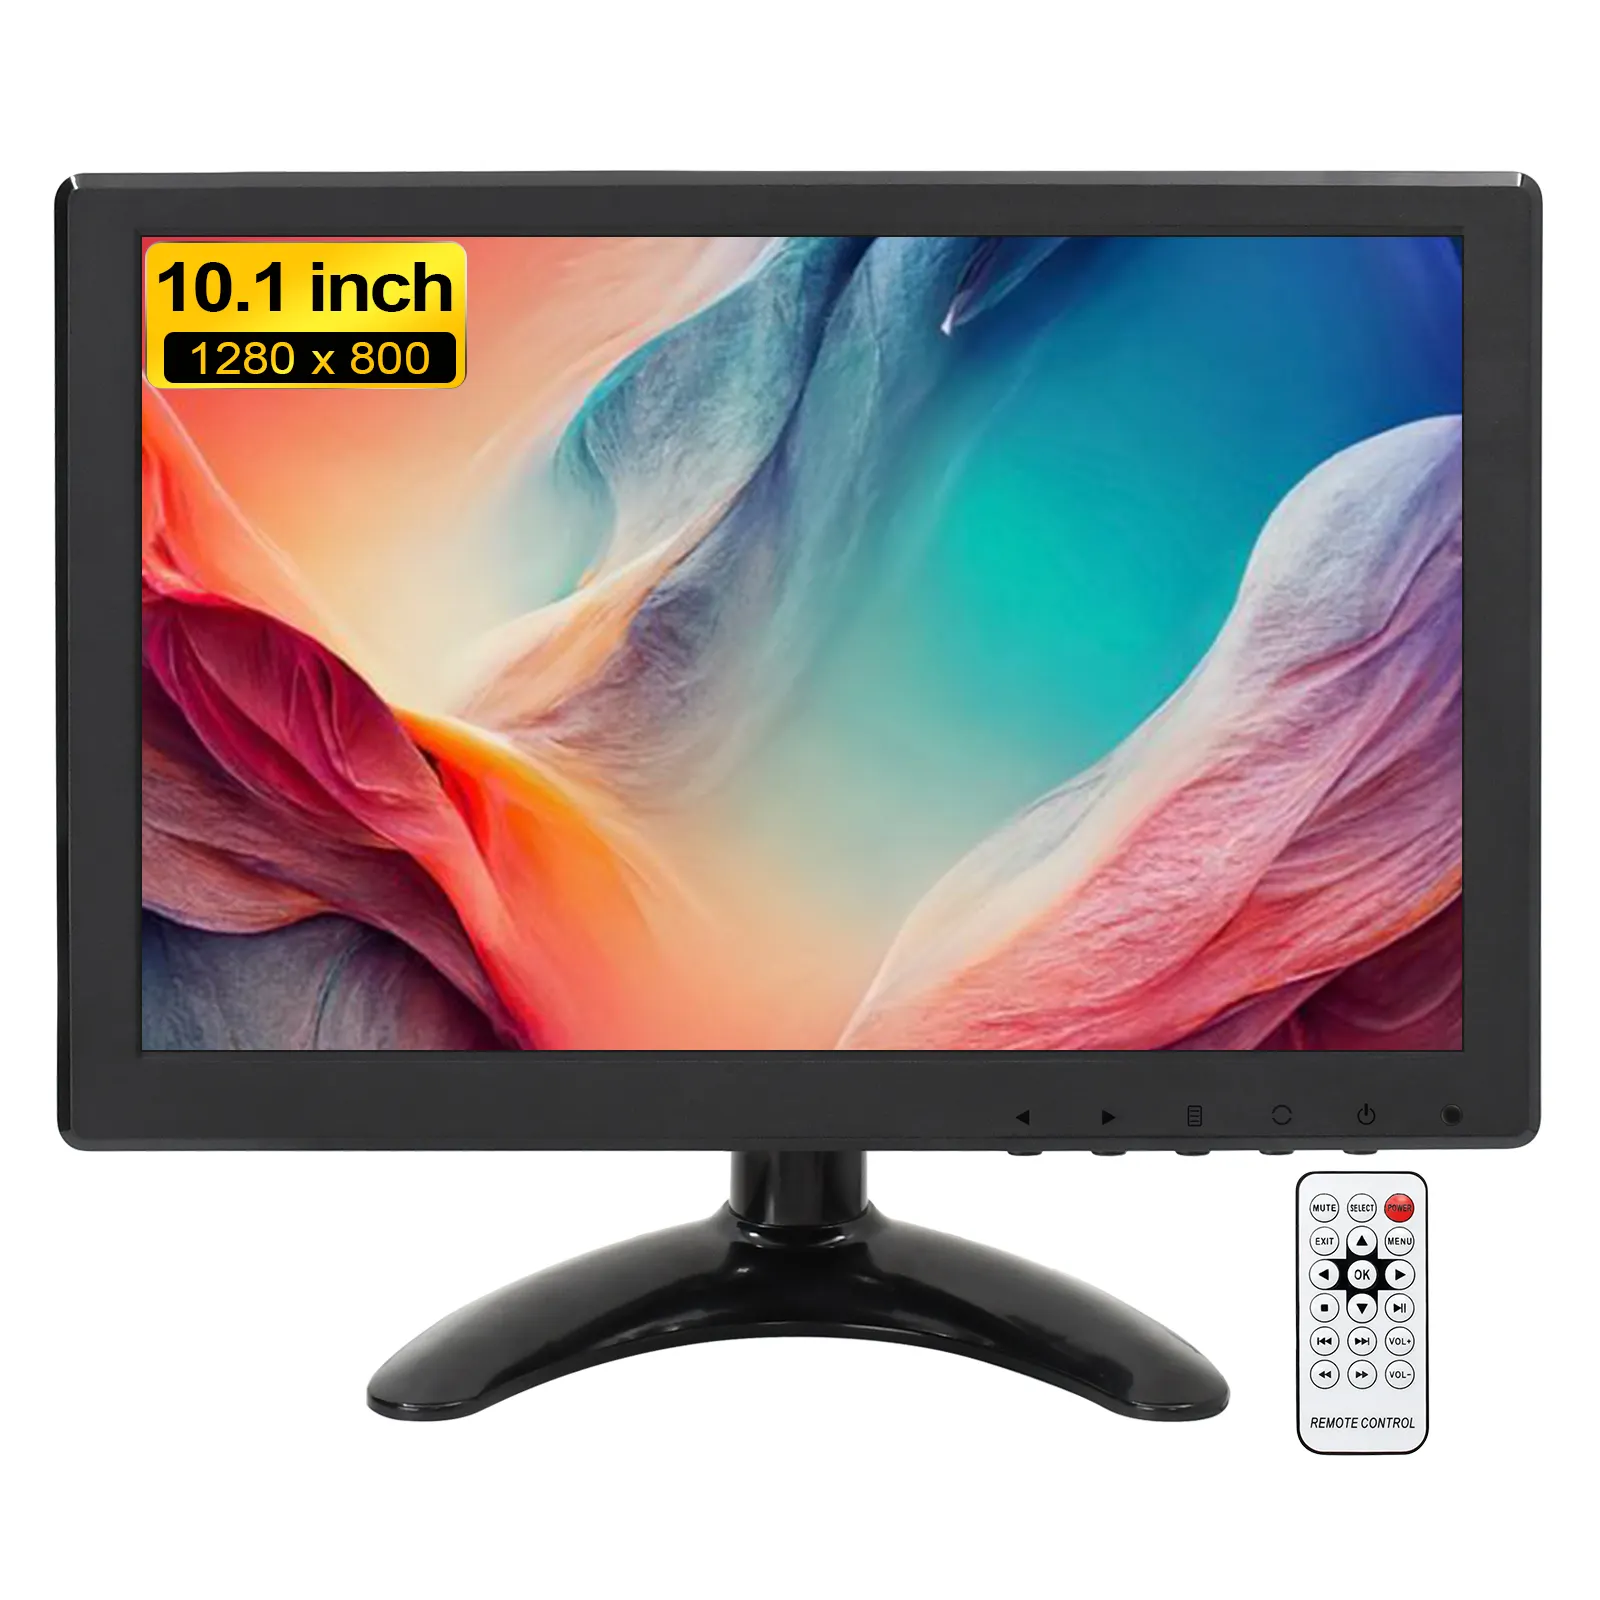 Monitor tela LCD Monitor tela táctil TFT LCD capacitivo tela táctil impermeável 10,1 polegadas monitor